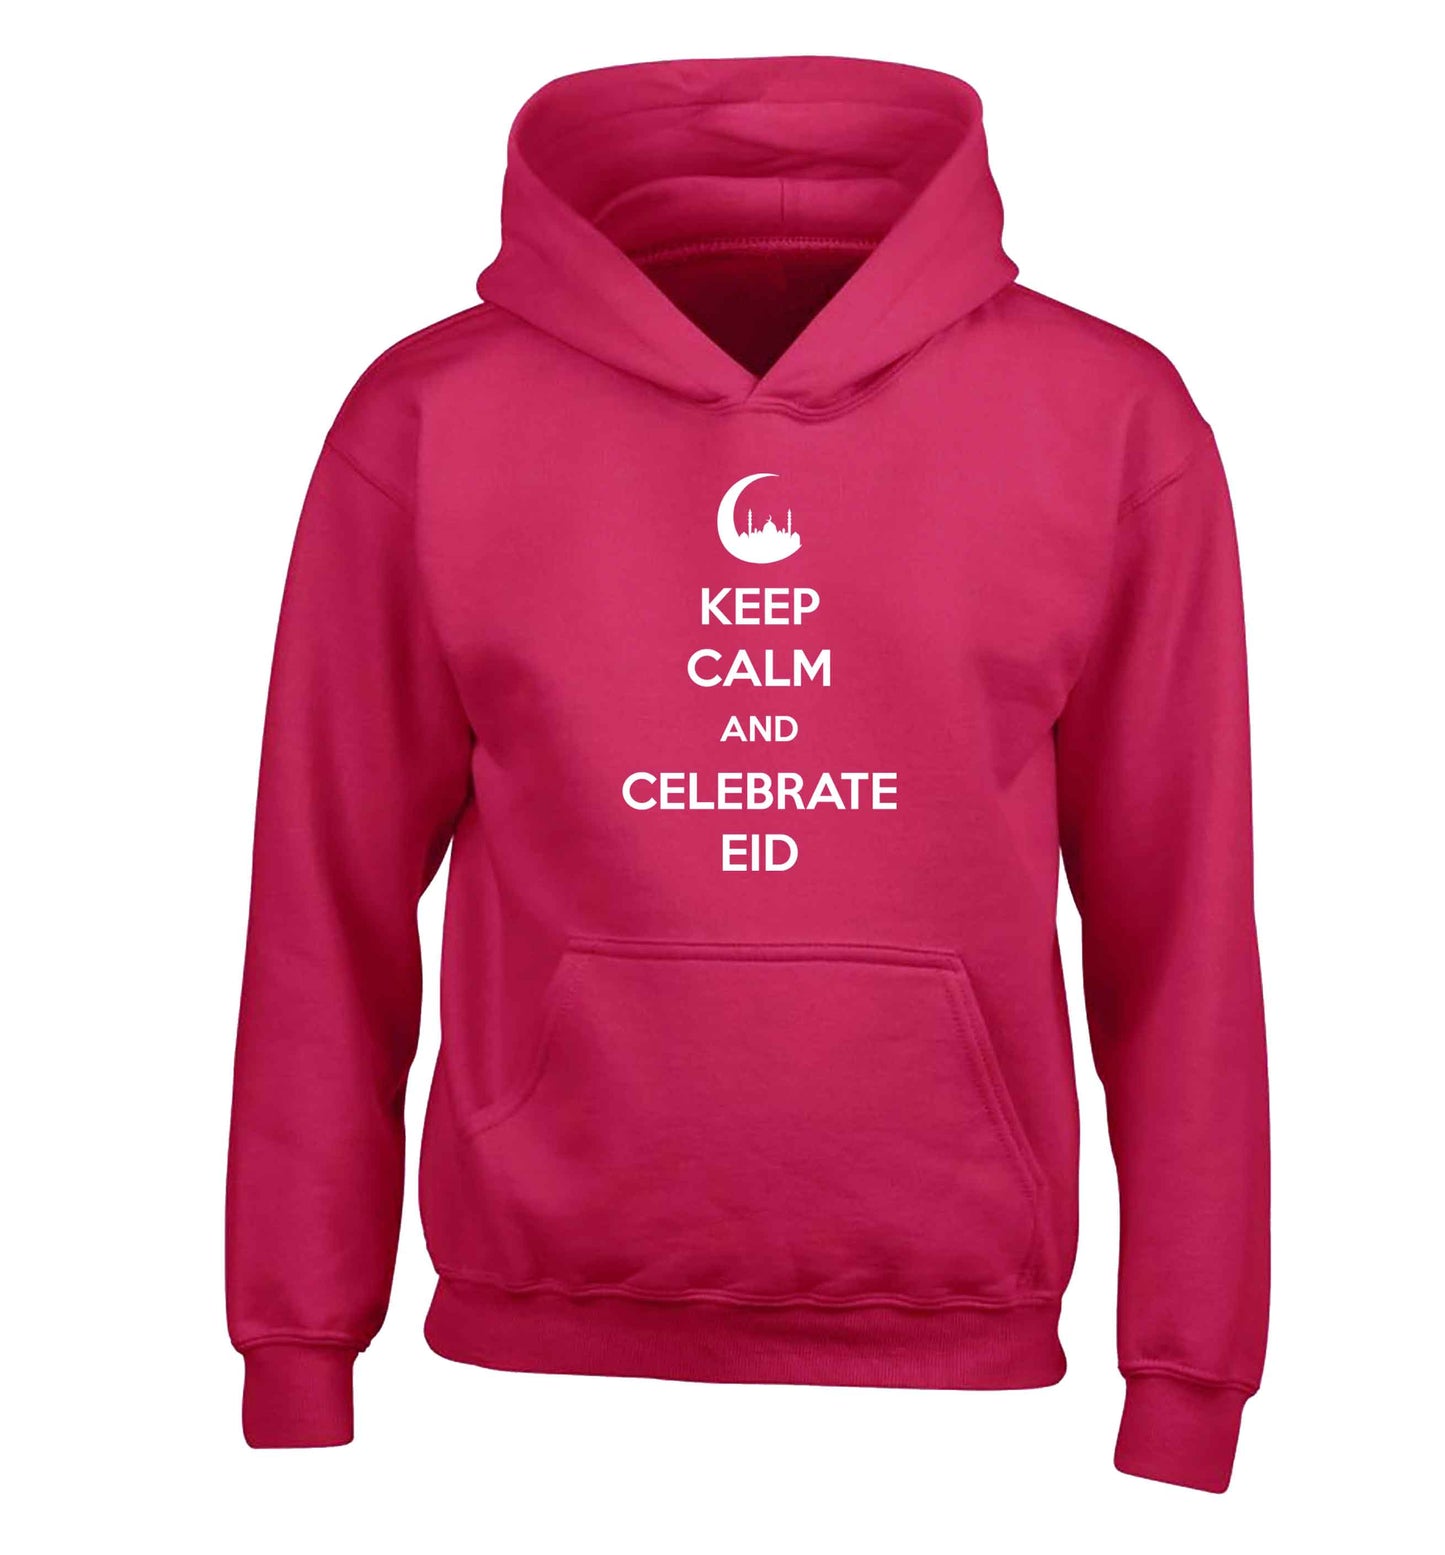 Keep calm and celebrate Eid children's pink hoodie 12-13 Years